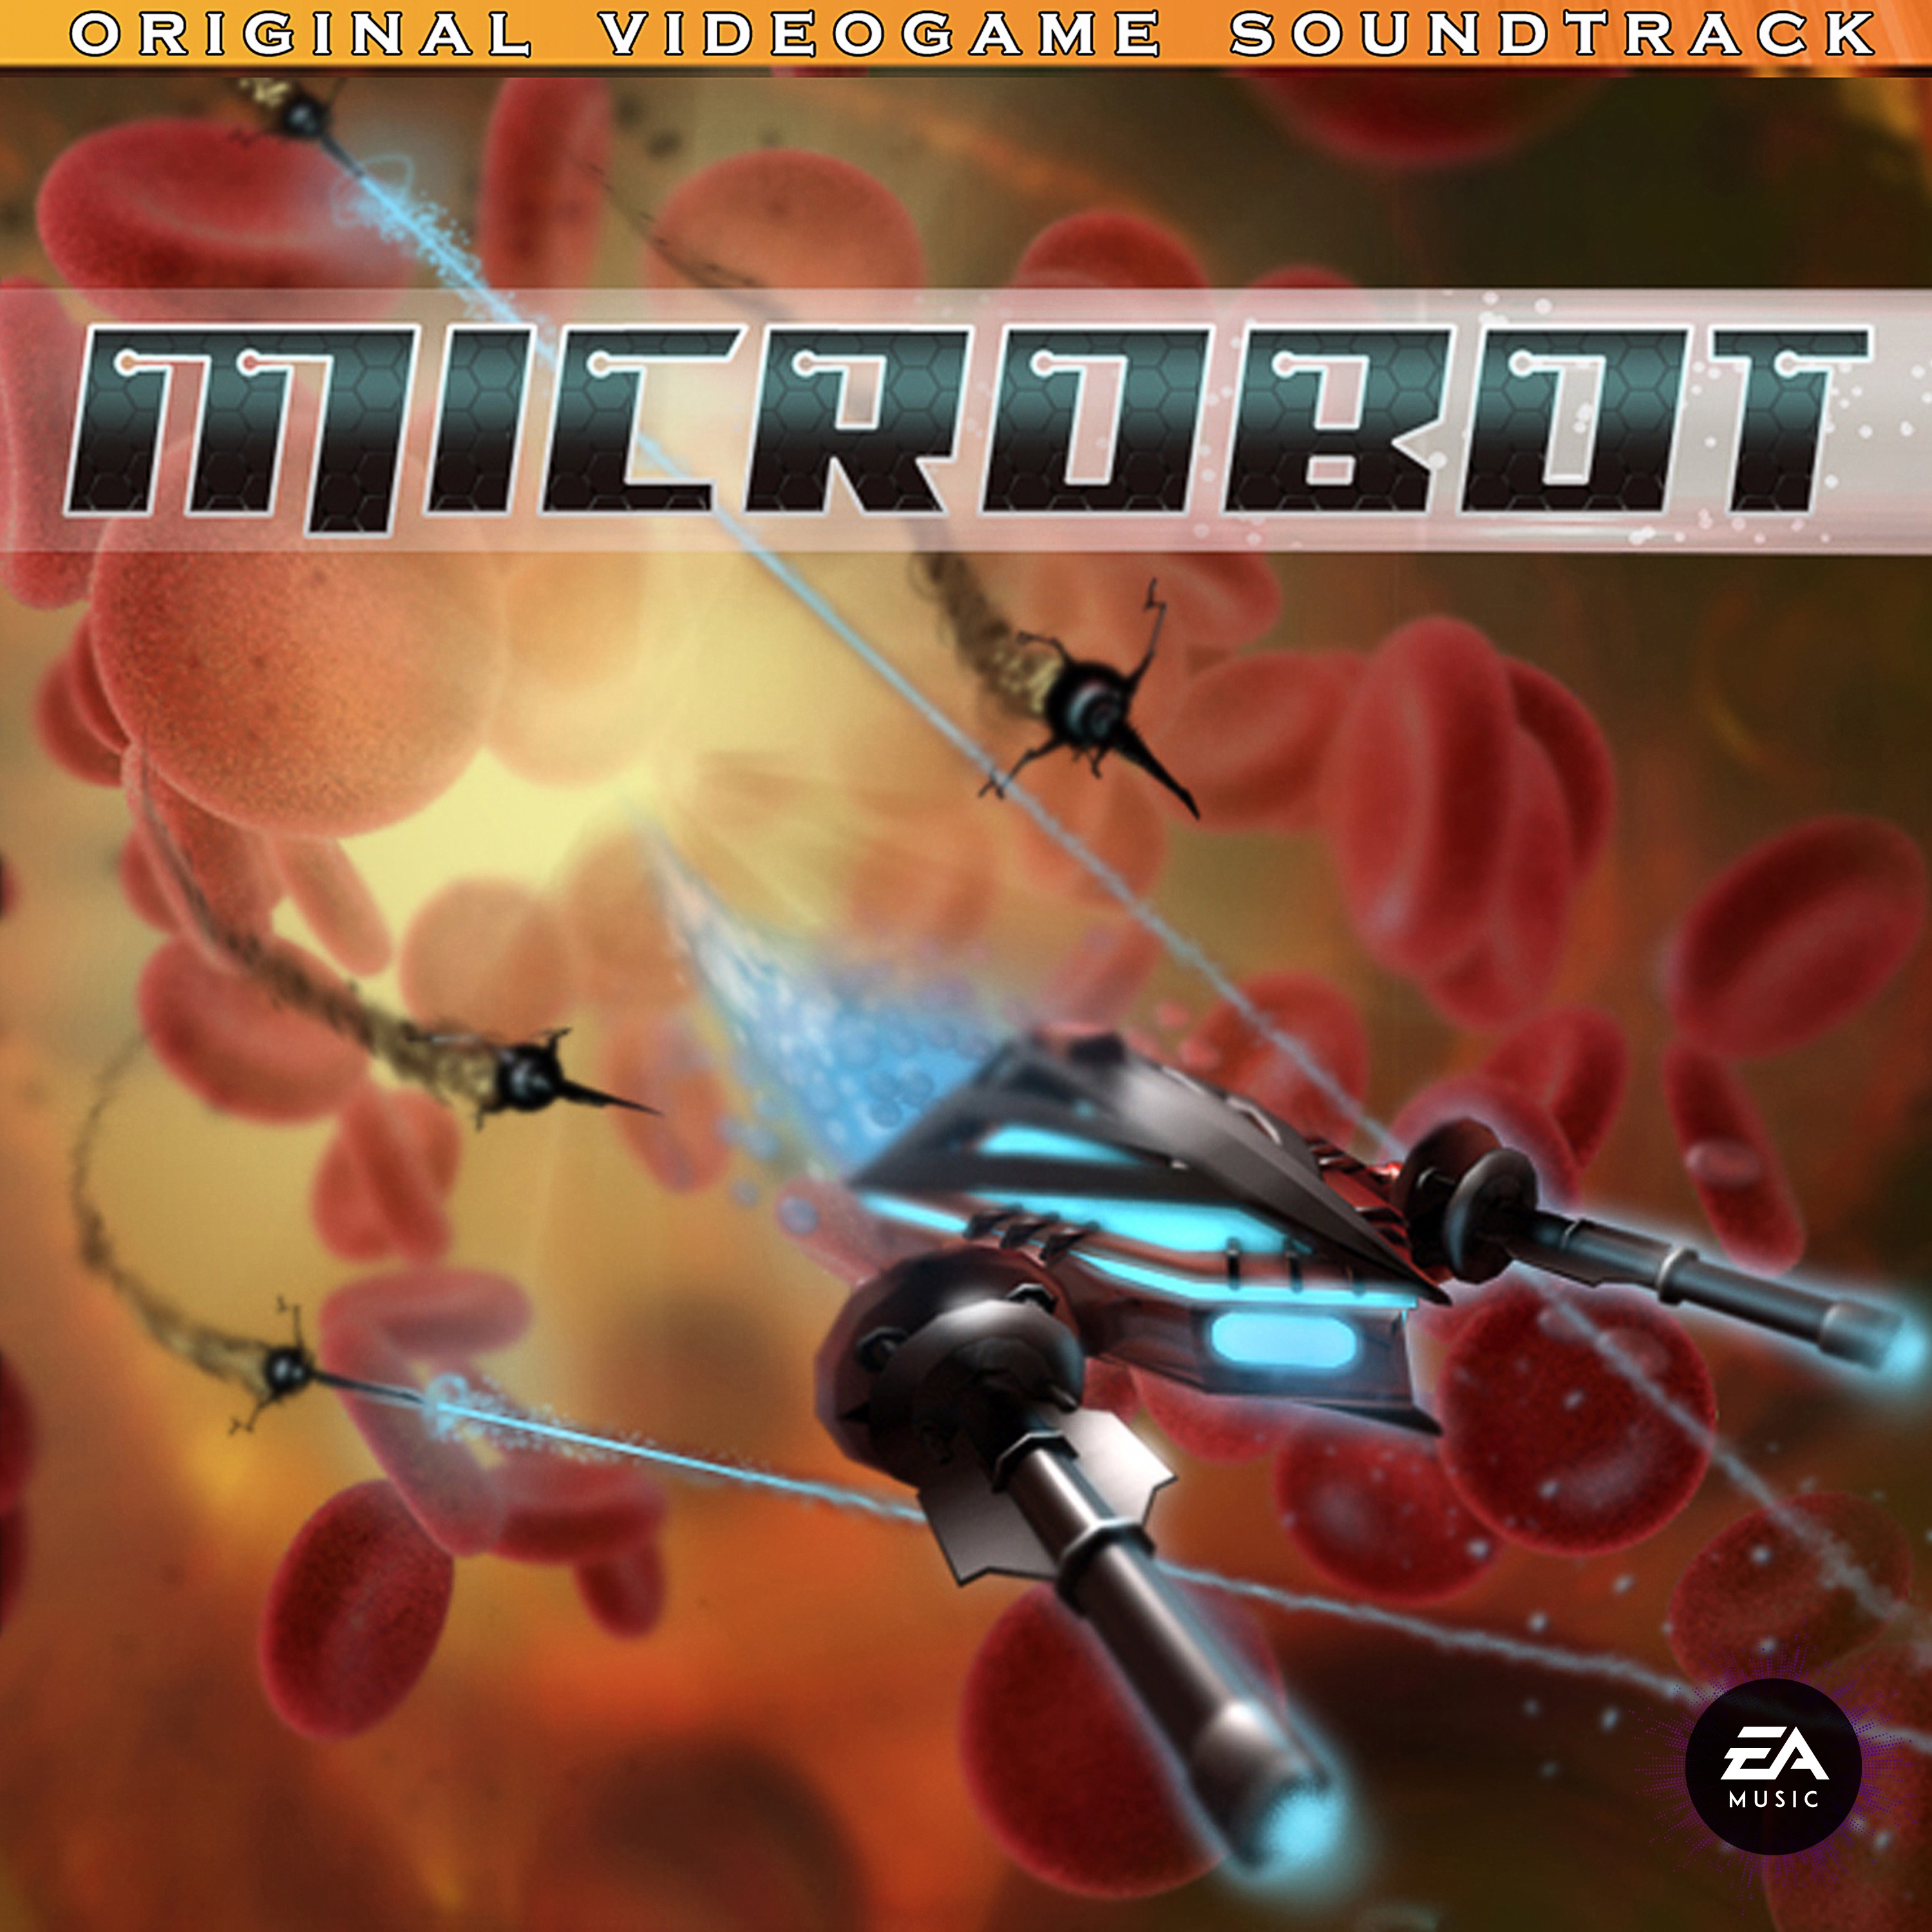 Включи саундтрек из игры. Microbot игра. Microbot ps3. Microbot game. Jars видеоигра OST.